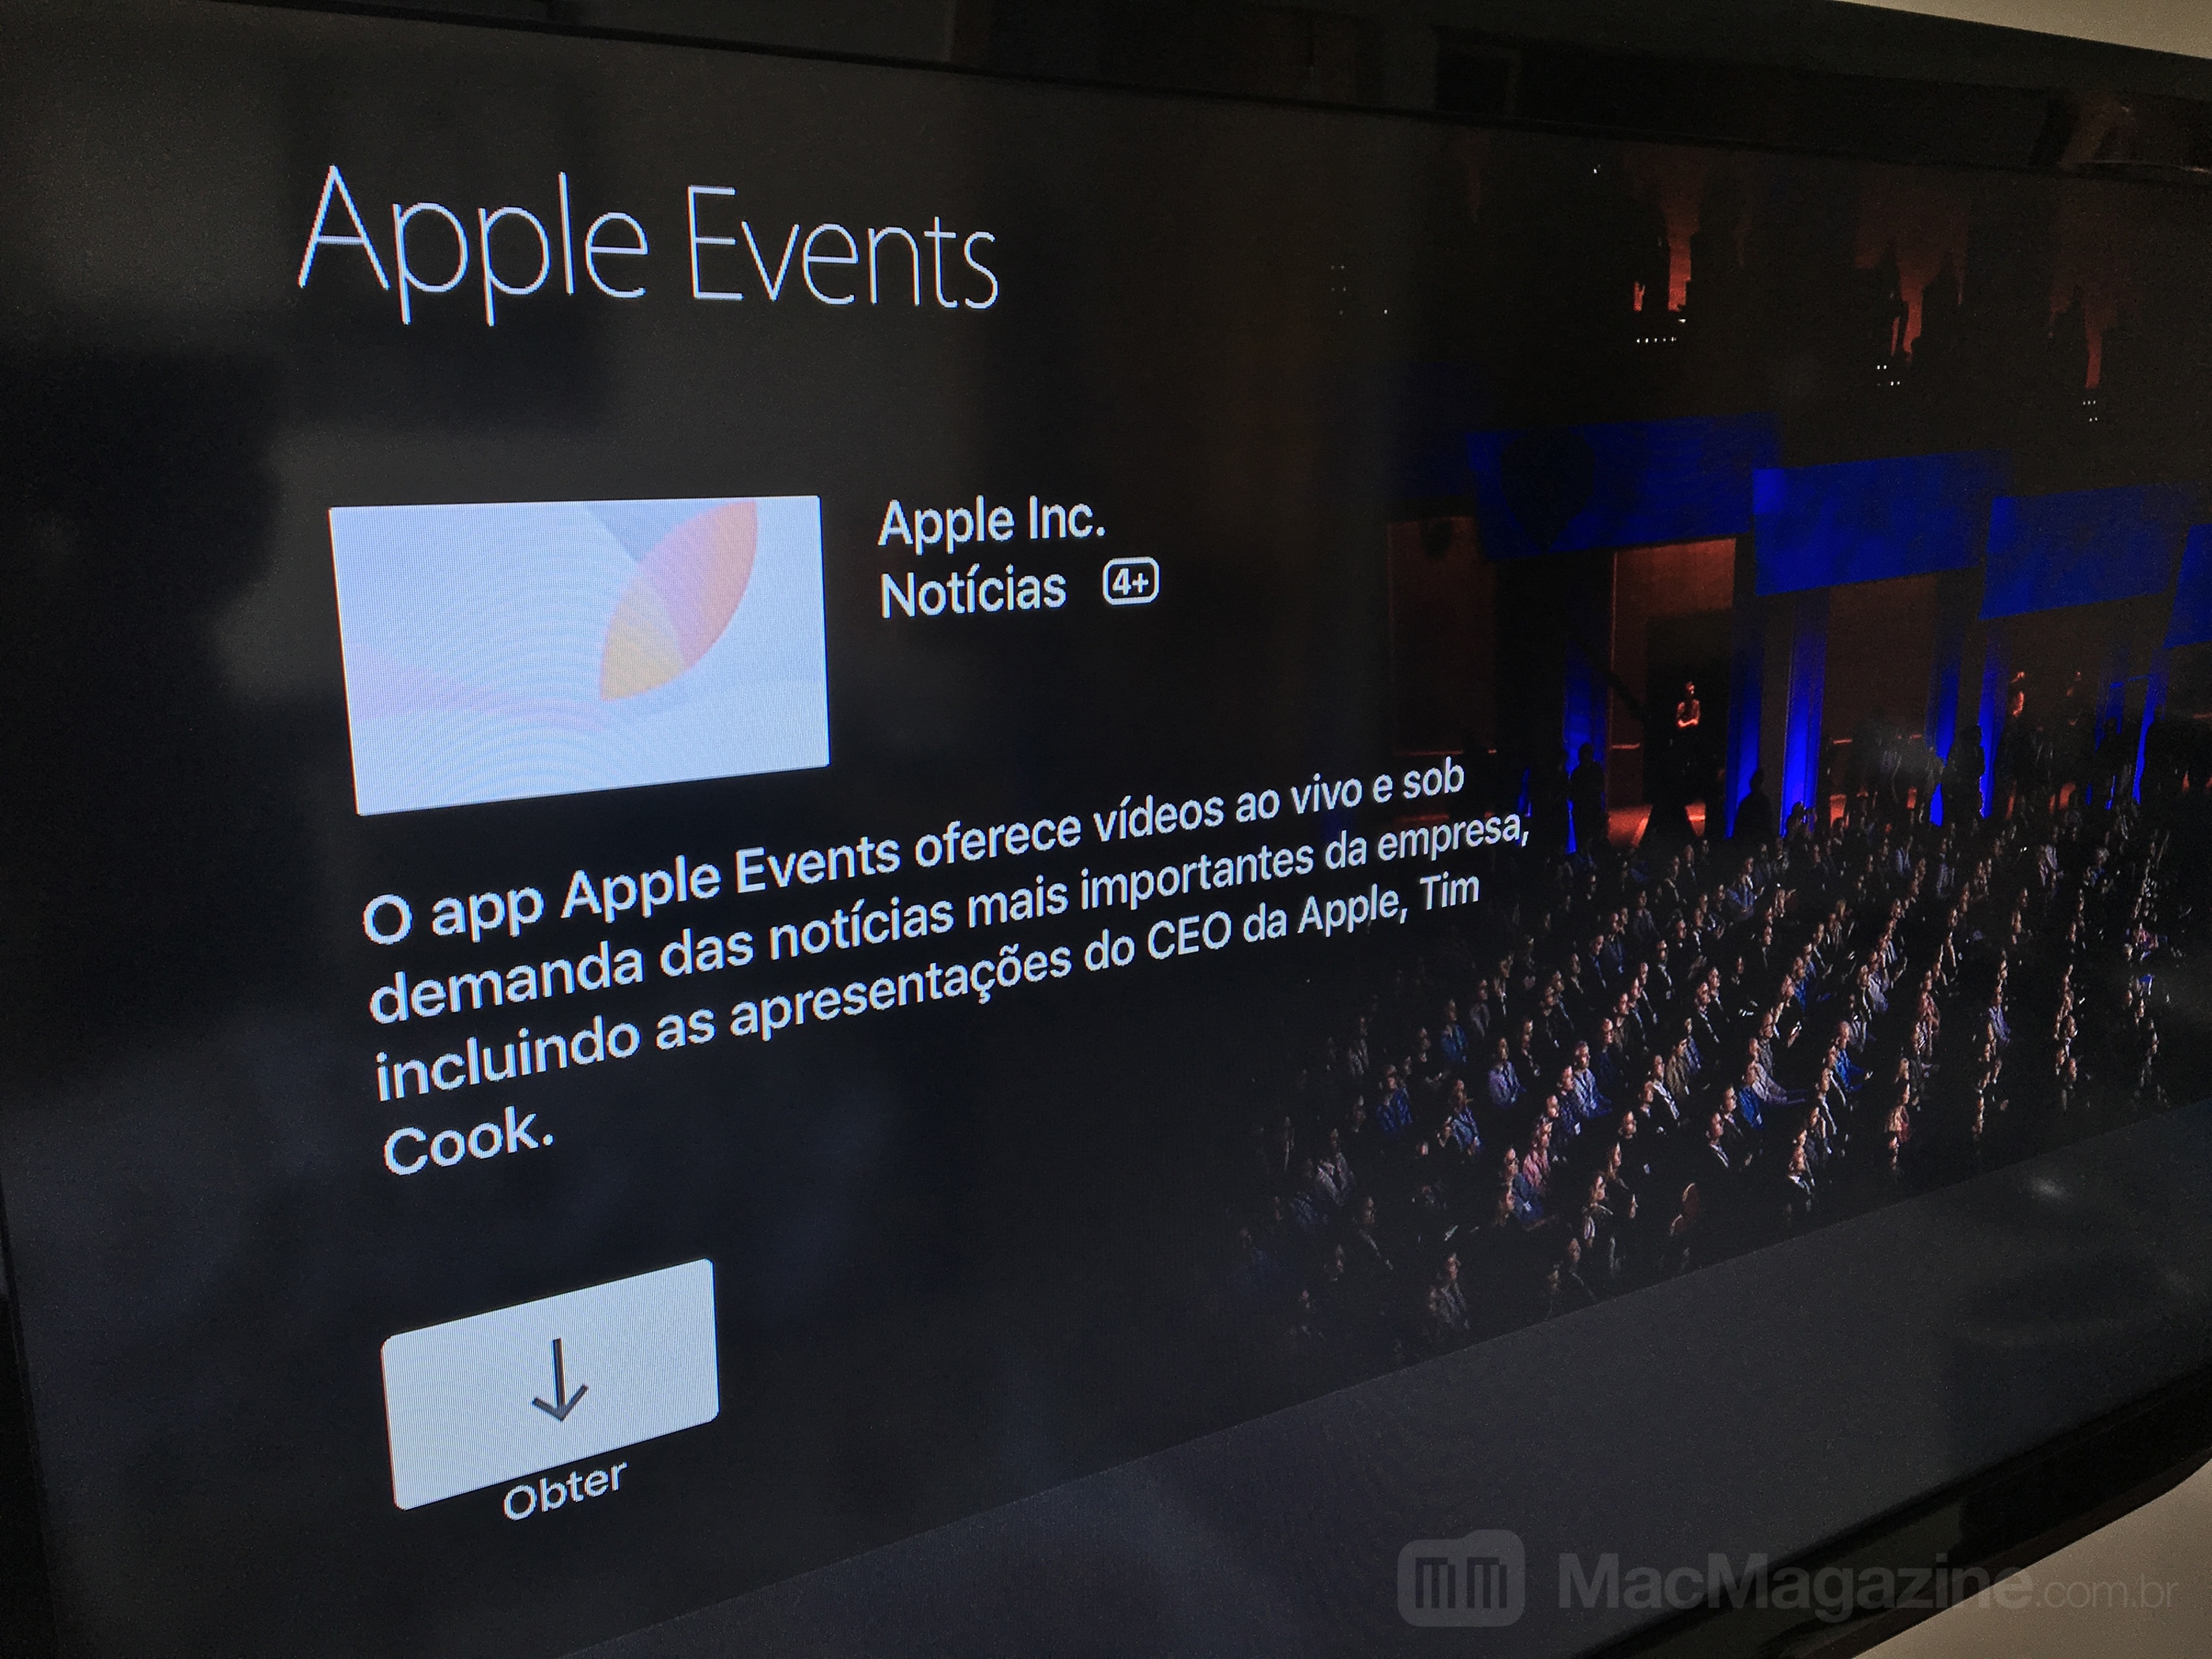 Apple Events na Apple TV